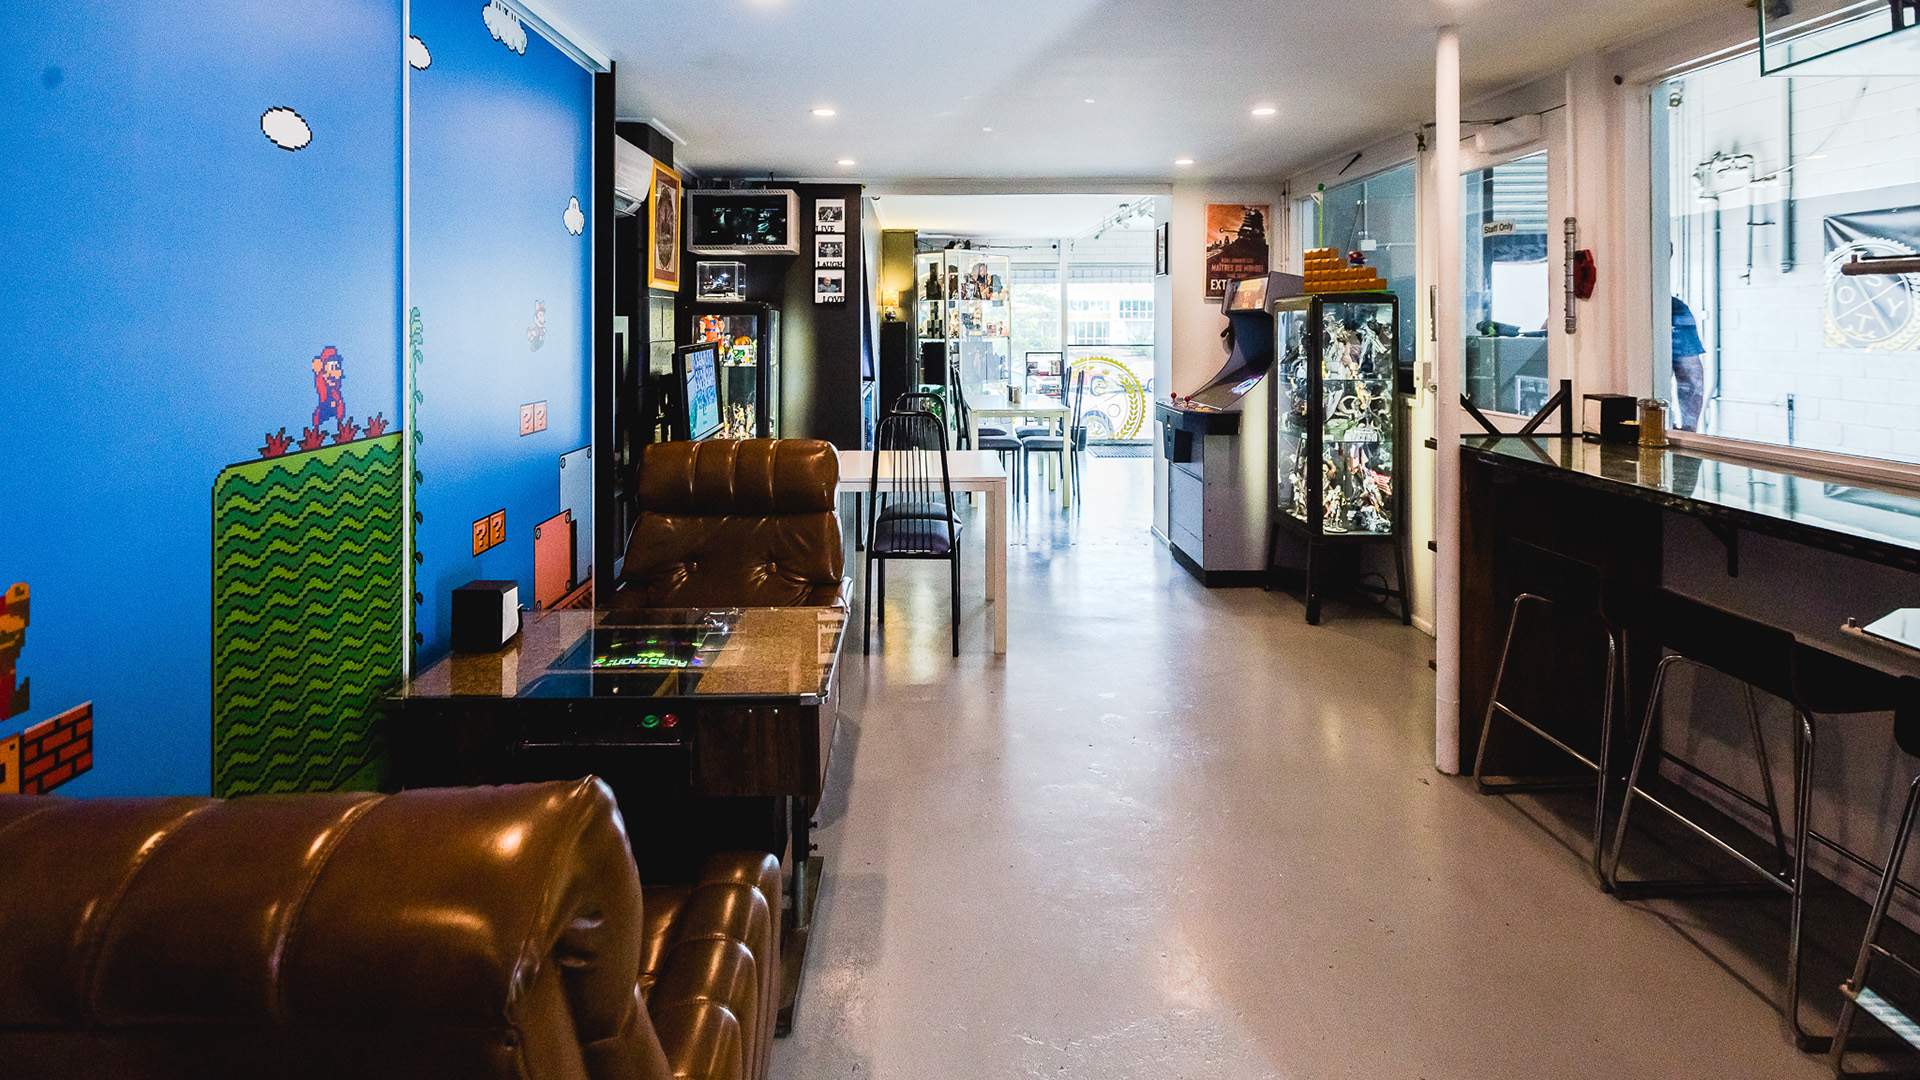 Meet Brisbane's New Retro Video Game Cafe